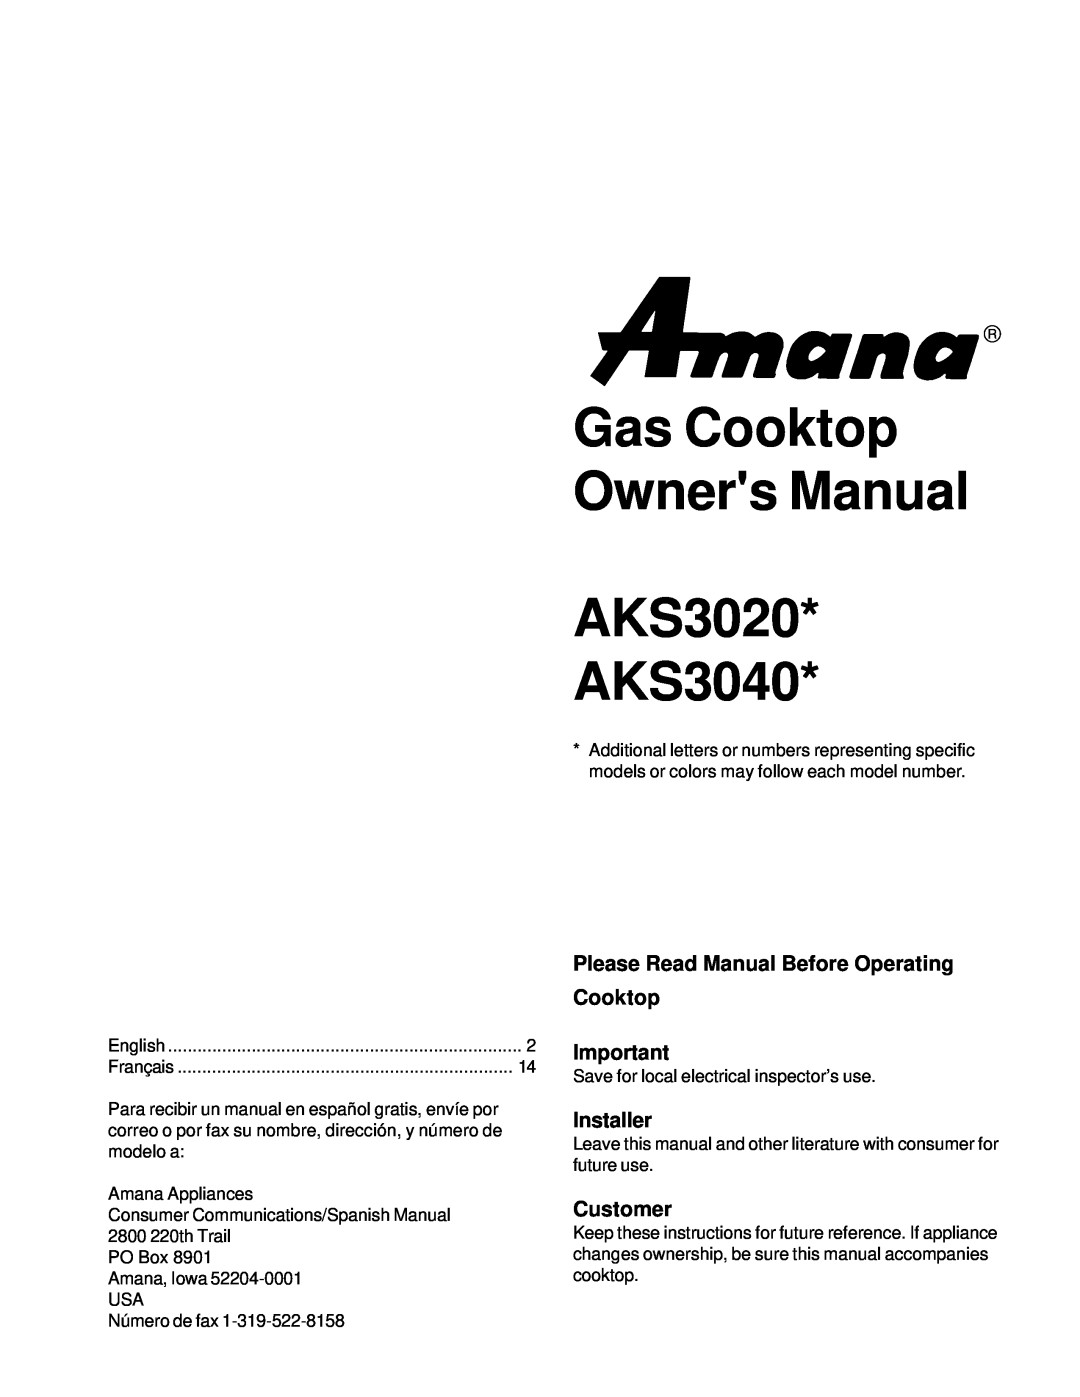 Amana AKS3020 owner manual Please Read Manual Before Operating Cooktop, Installer, Customer 